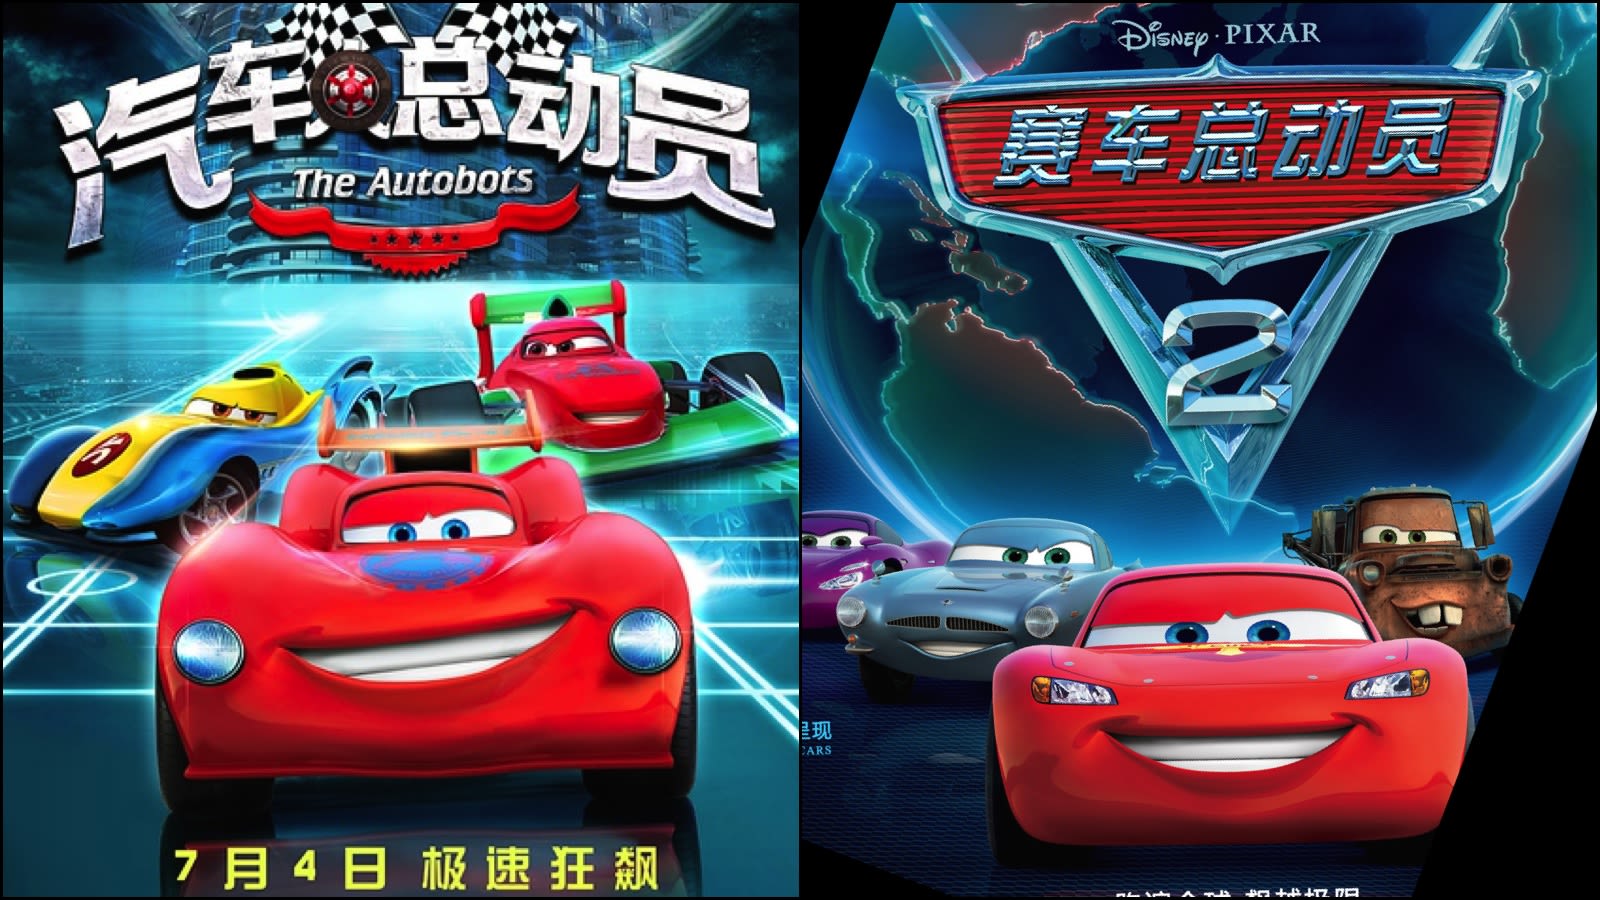 Copycat movie? Filmmaker denies knocking off Pixar's 'Cars